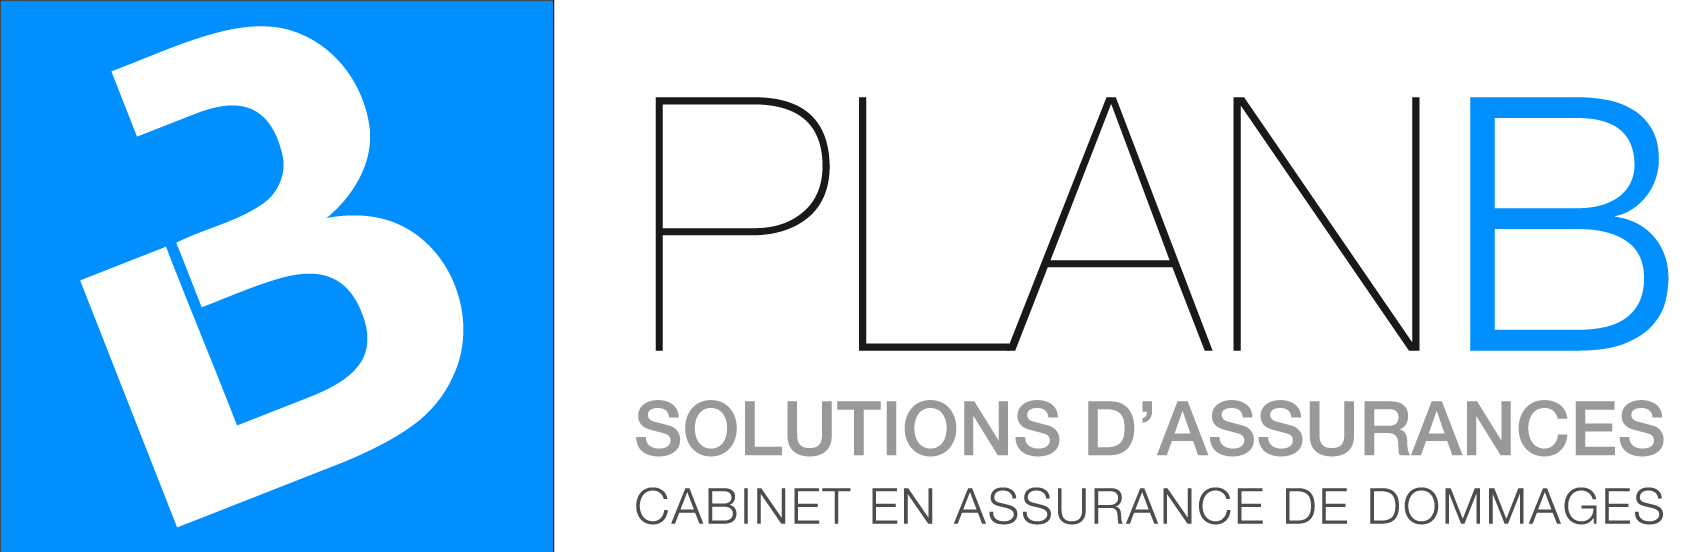 Plan B - Solutions d'assurances